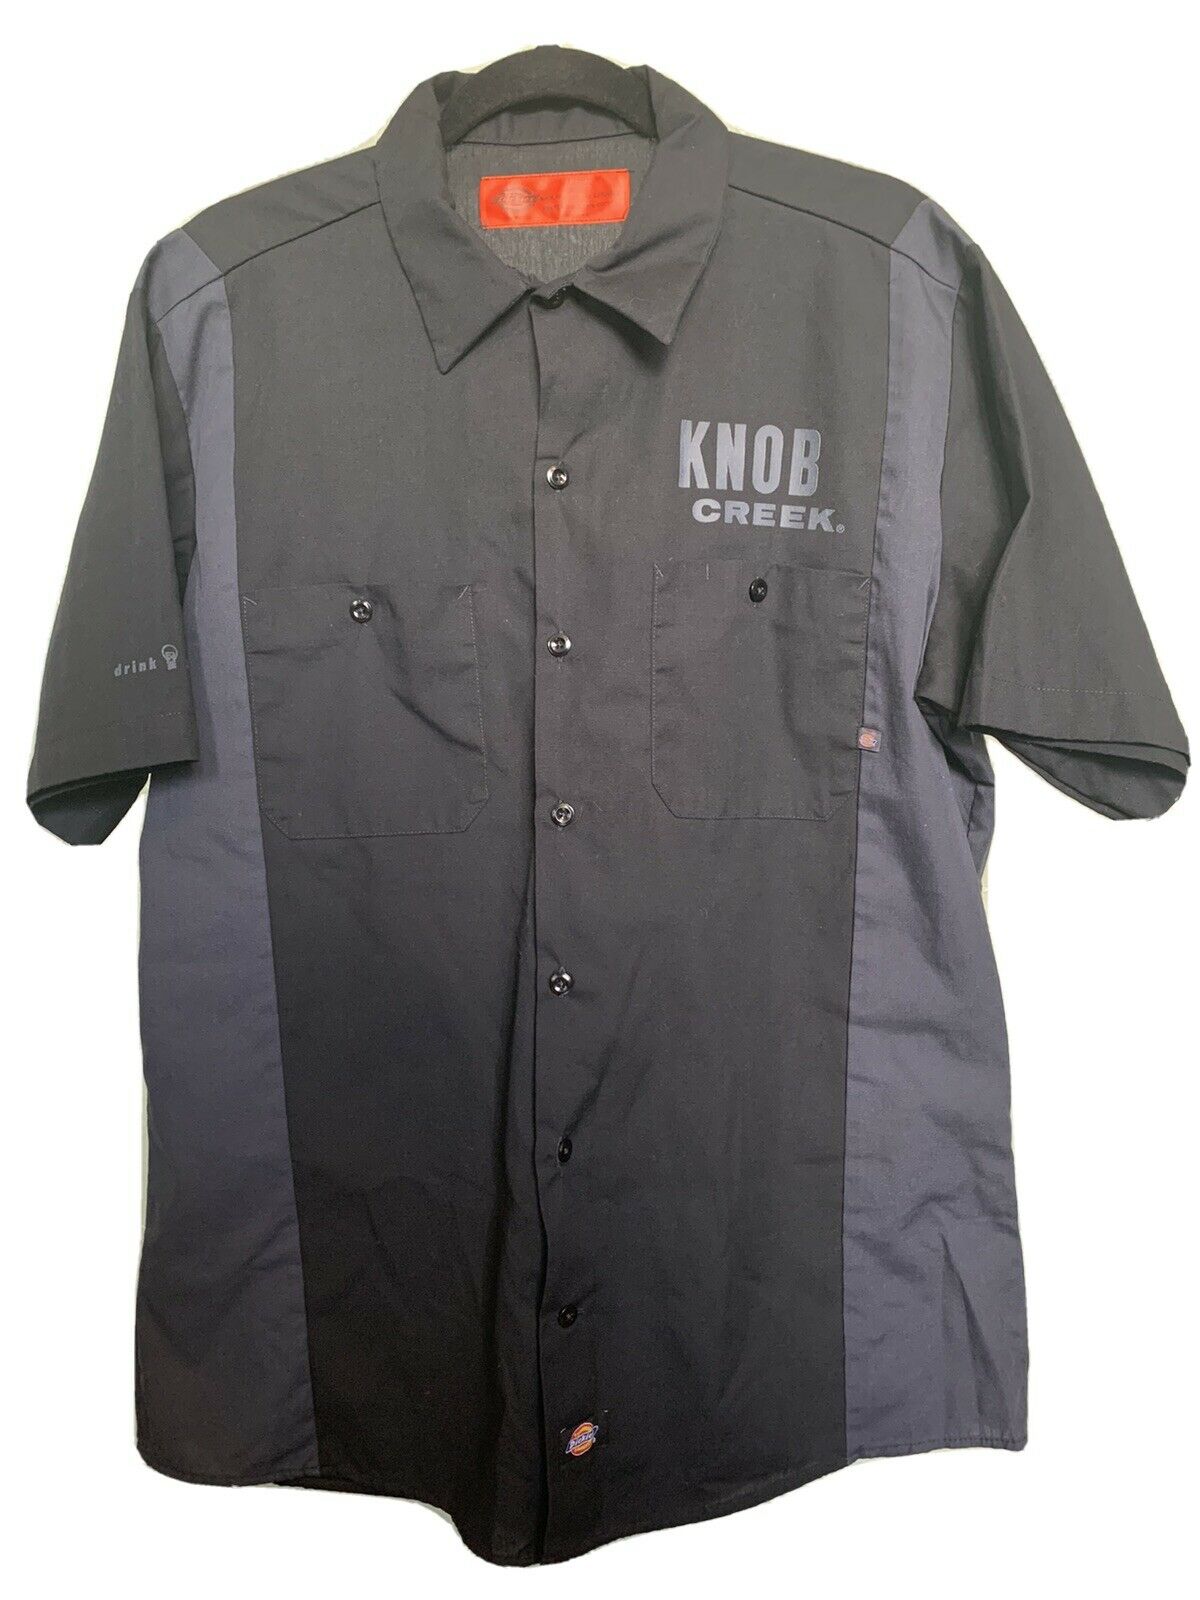 Knob Creek Whiskey Charcoal Dickies Button Up Work Garage Shirt L